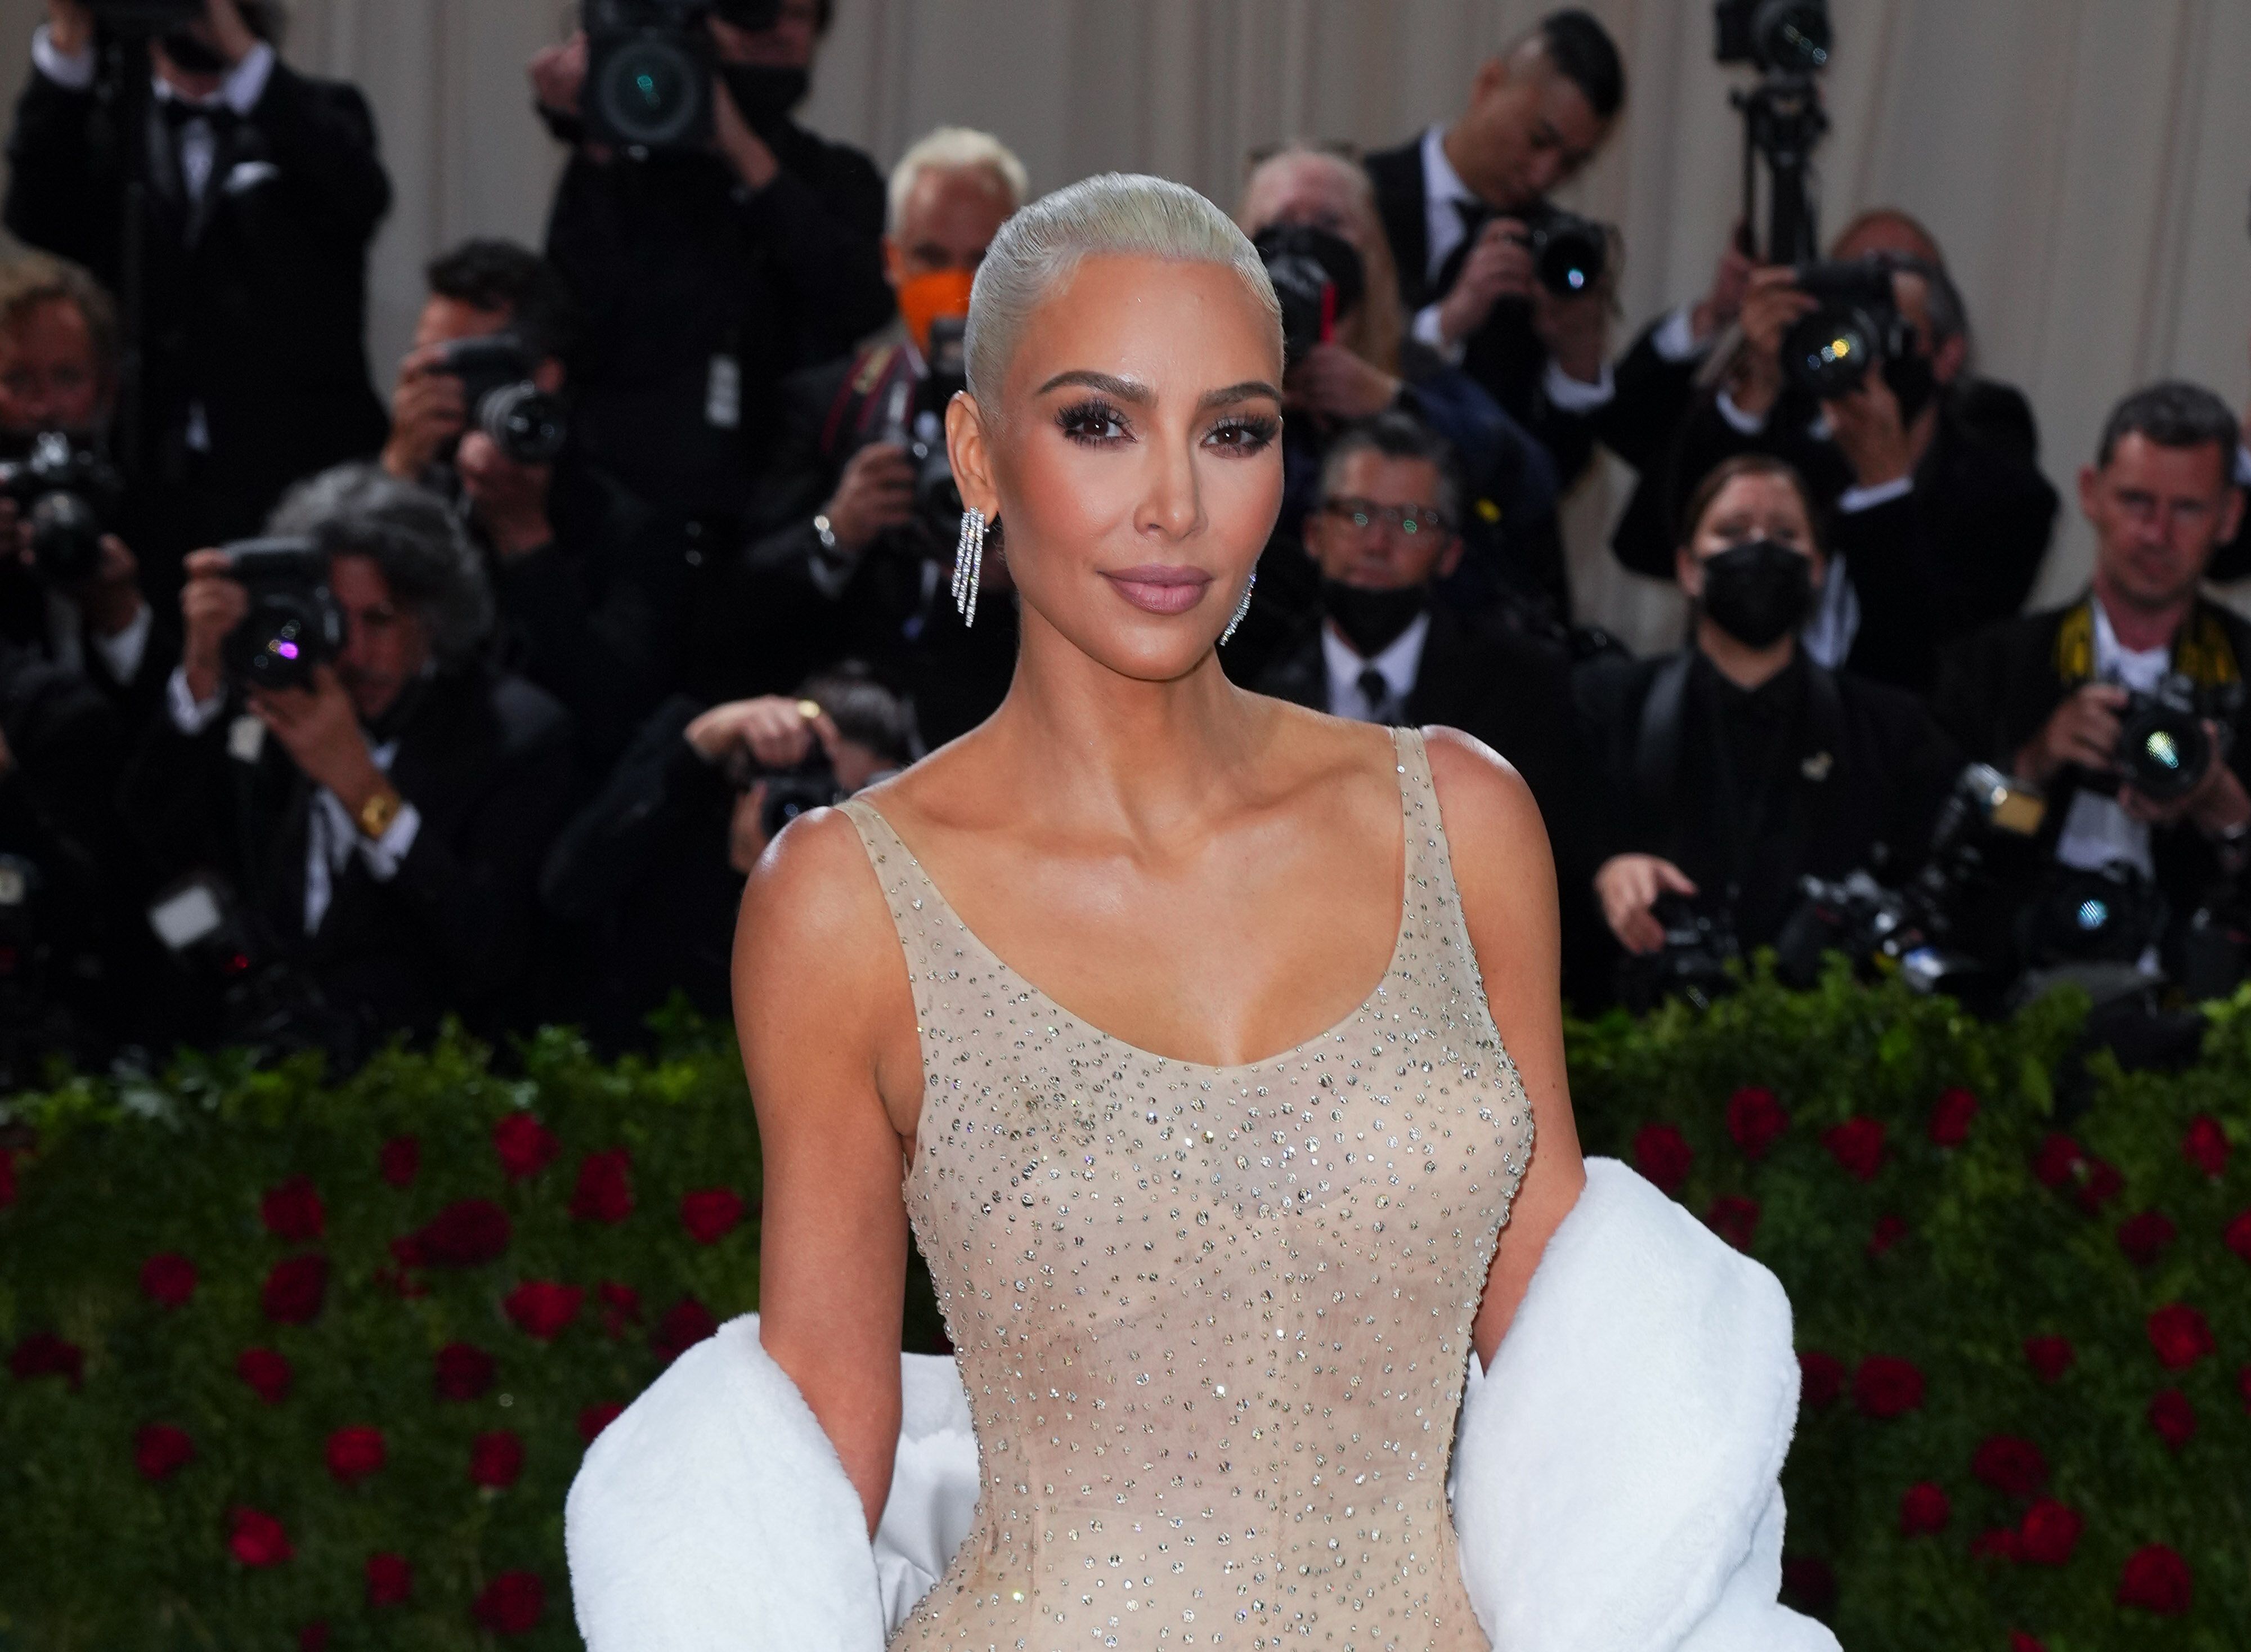 Au Met Gala, Kim Kardashian a porté une robe de Marilyn Monroe et cétait tout un travail photo photo